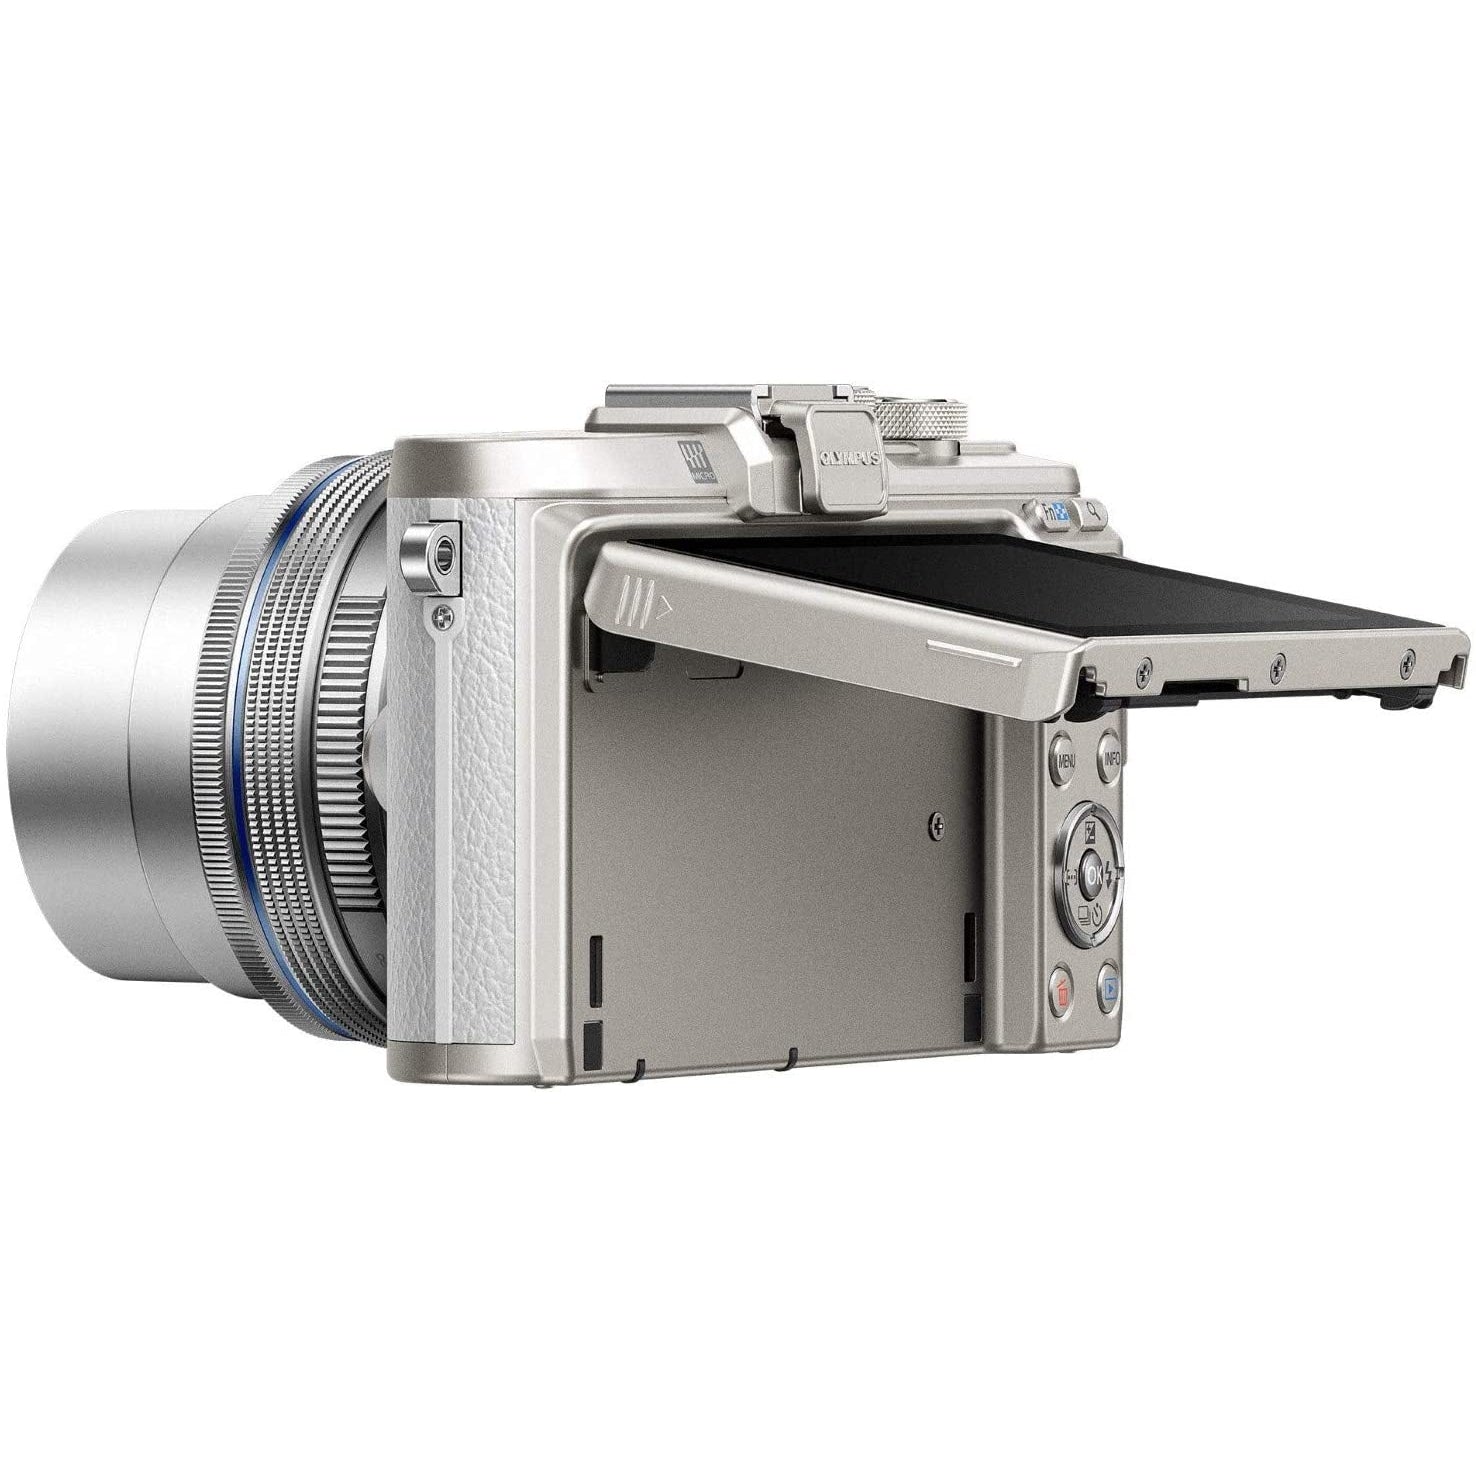 Olympus PEN E-PL8 Kit, 16.4 Megapixel, Image Stabilisation, Electronic Viewfinder, FHD Video, Wi-Fi + M.Zuiko 14-42 mm EZ Zoom Lens, White/Black